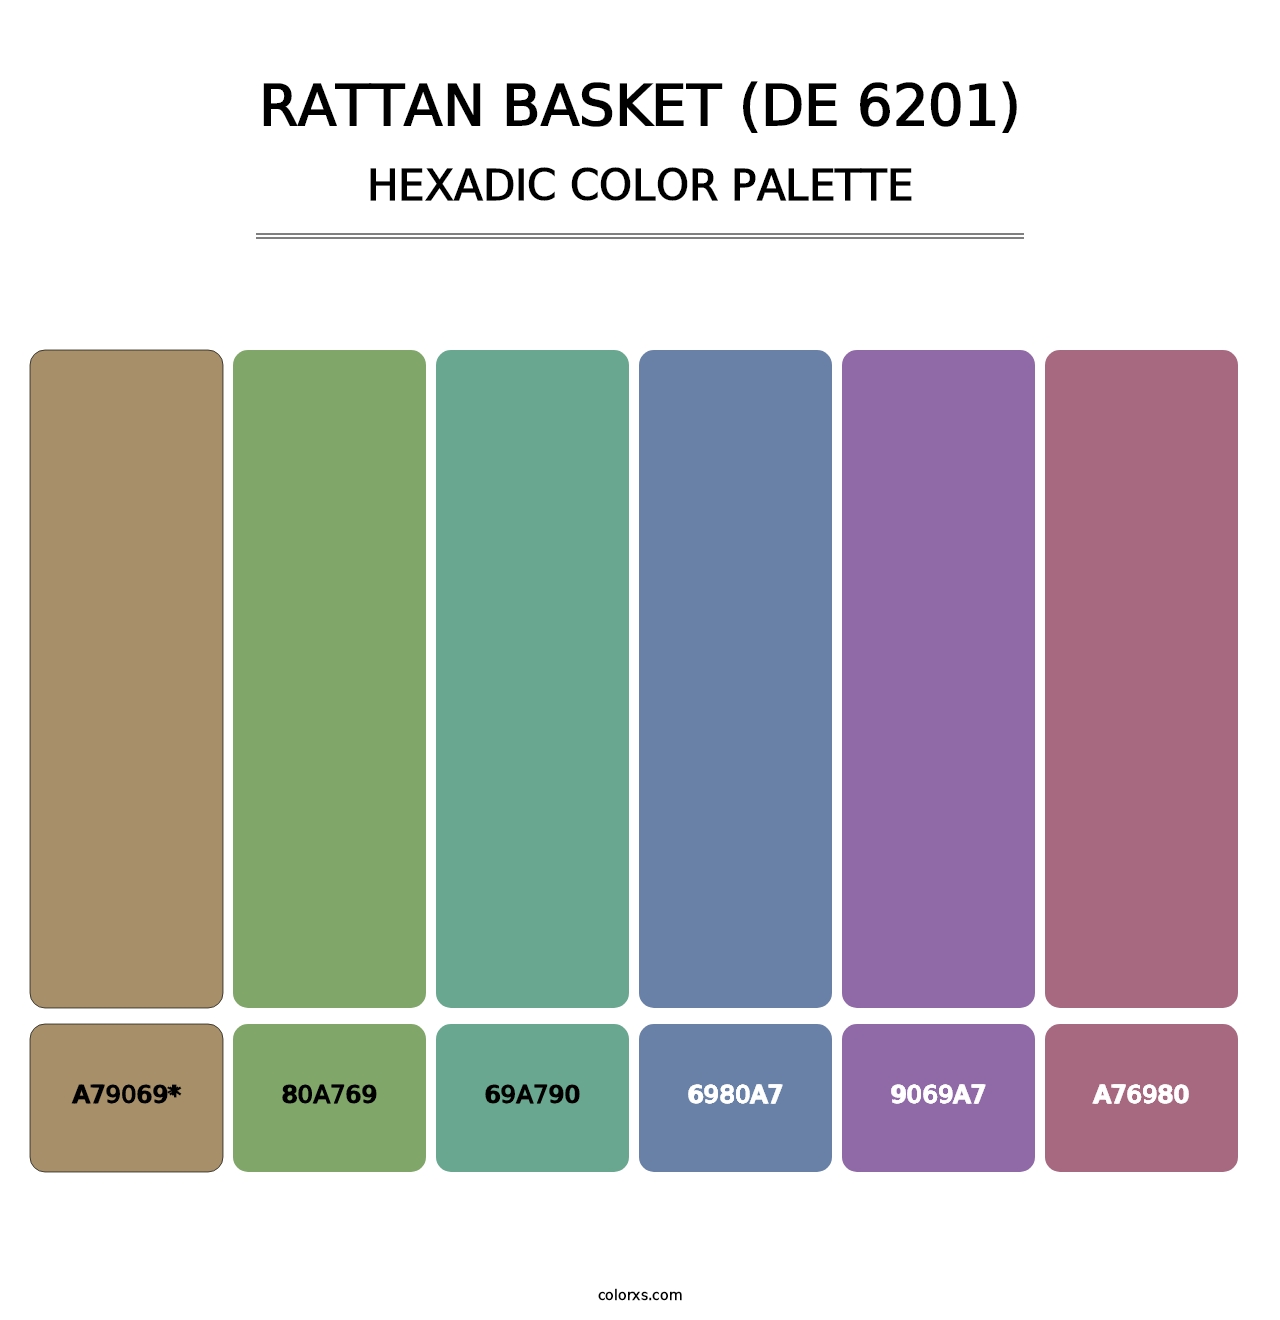 Rattan Basket (DE 6201) - Hexadic Color Palette